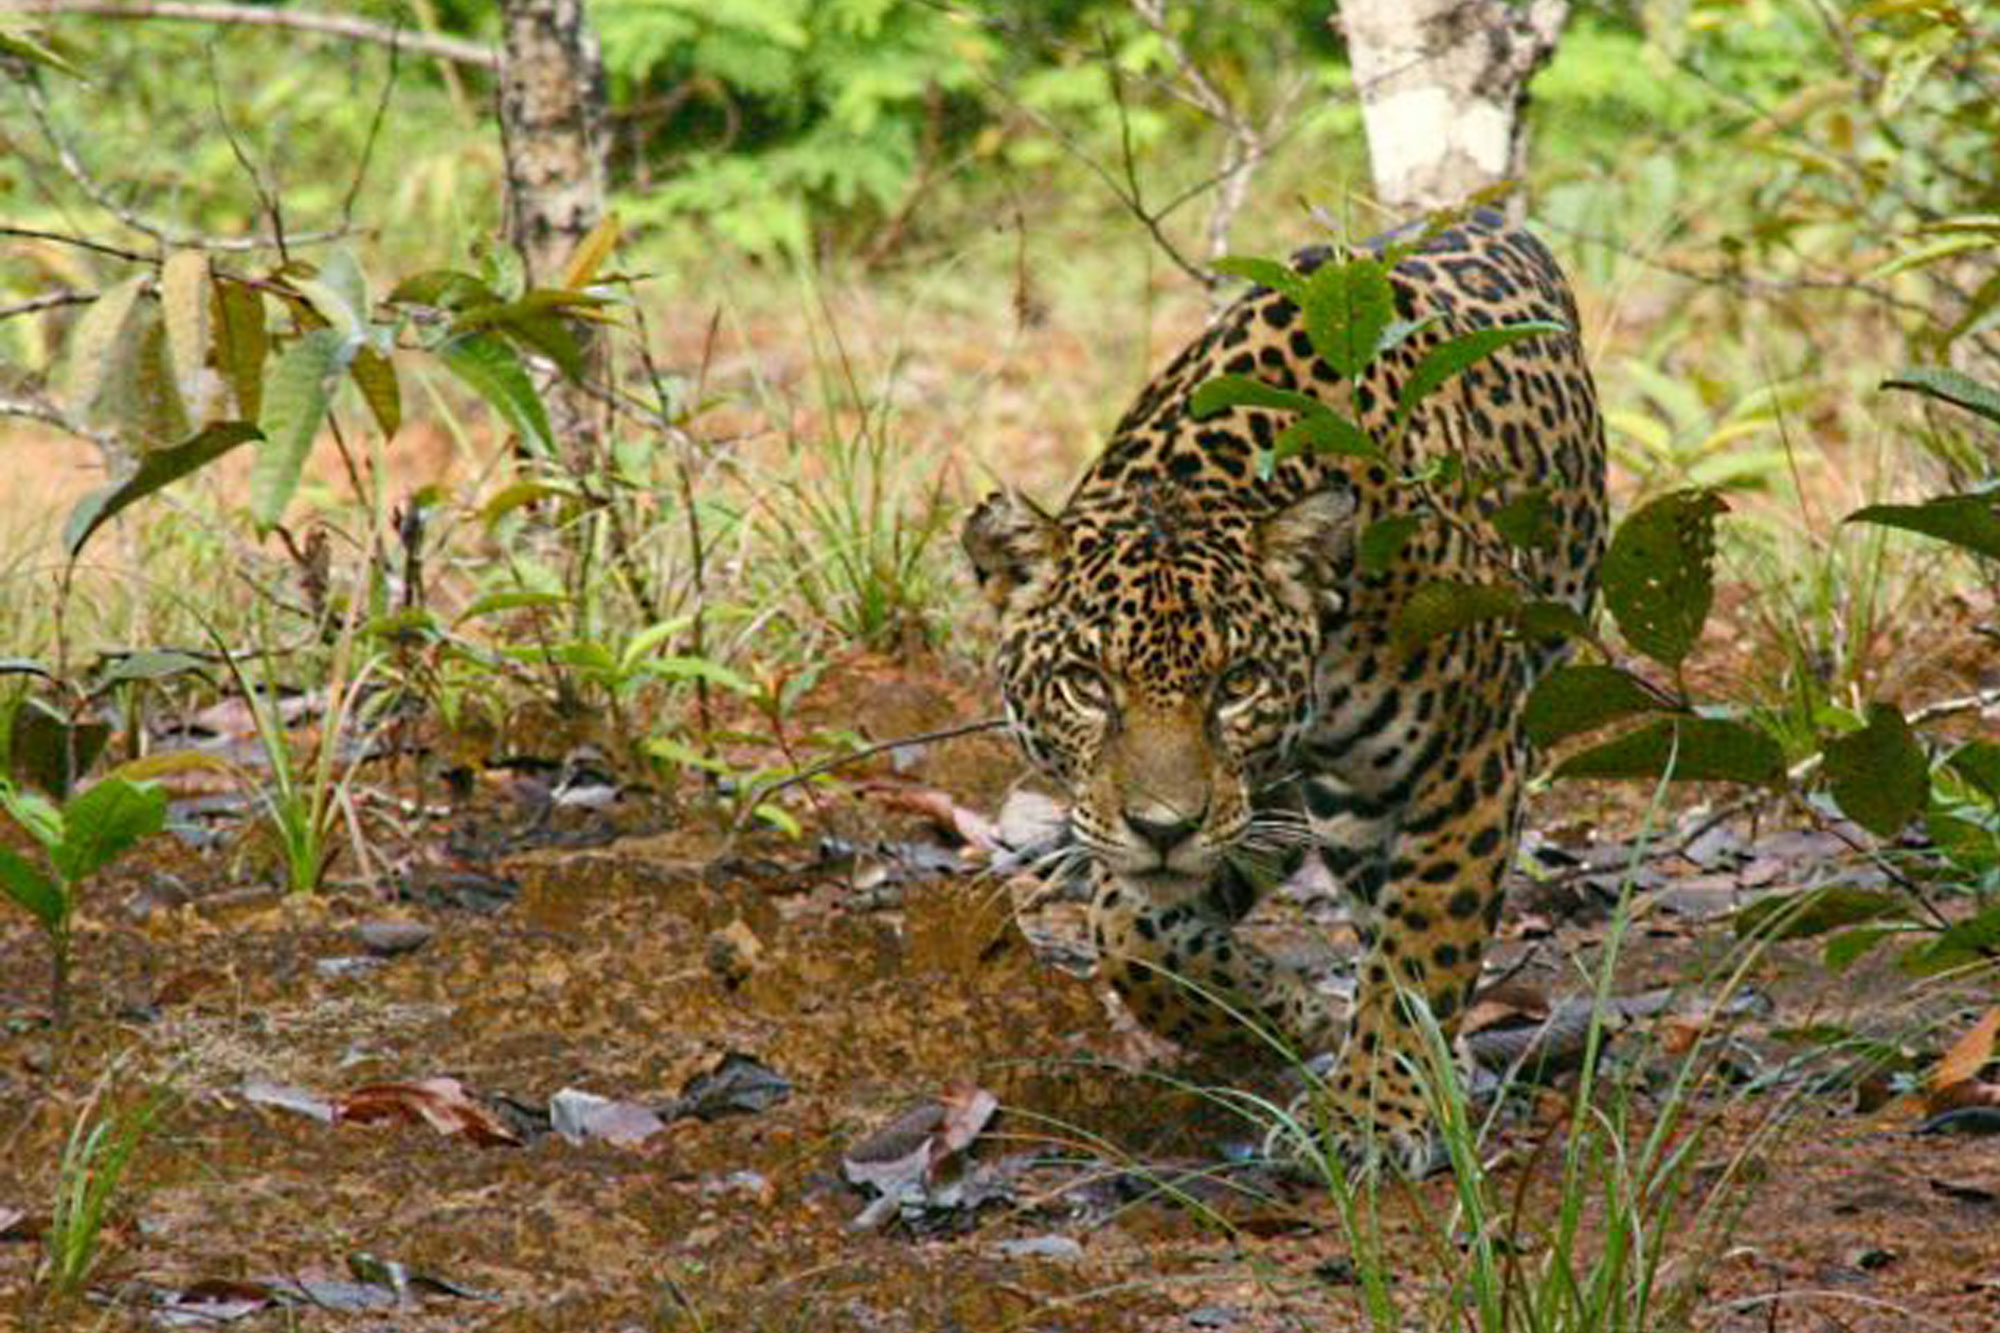 Poised jaguar waiting to strike